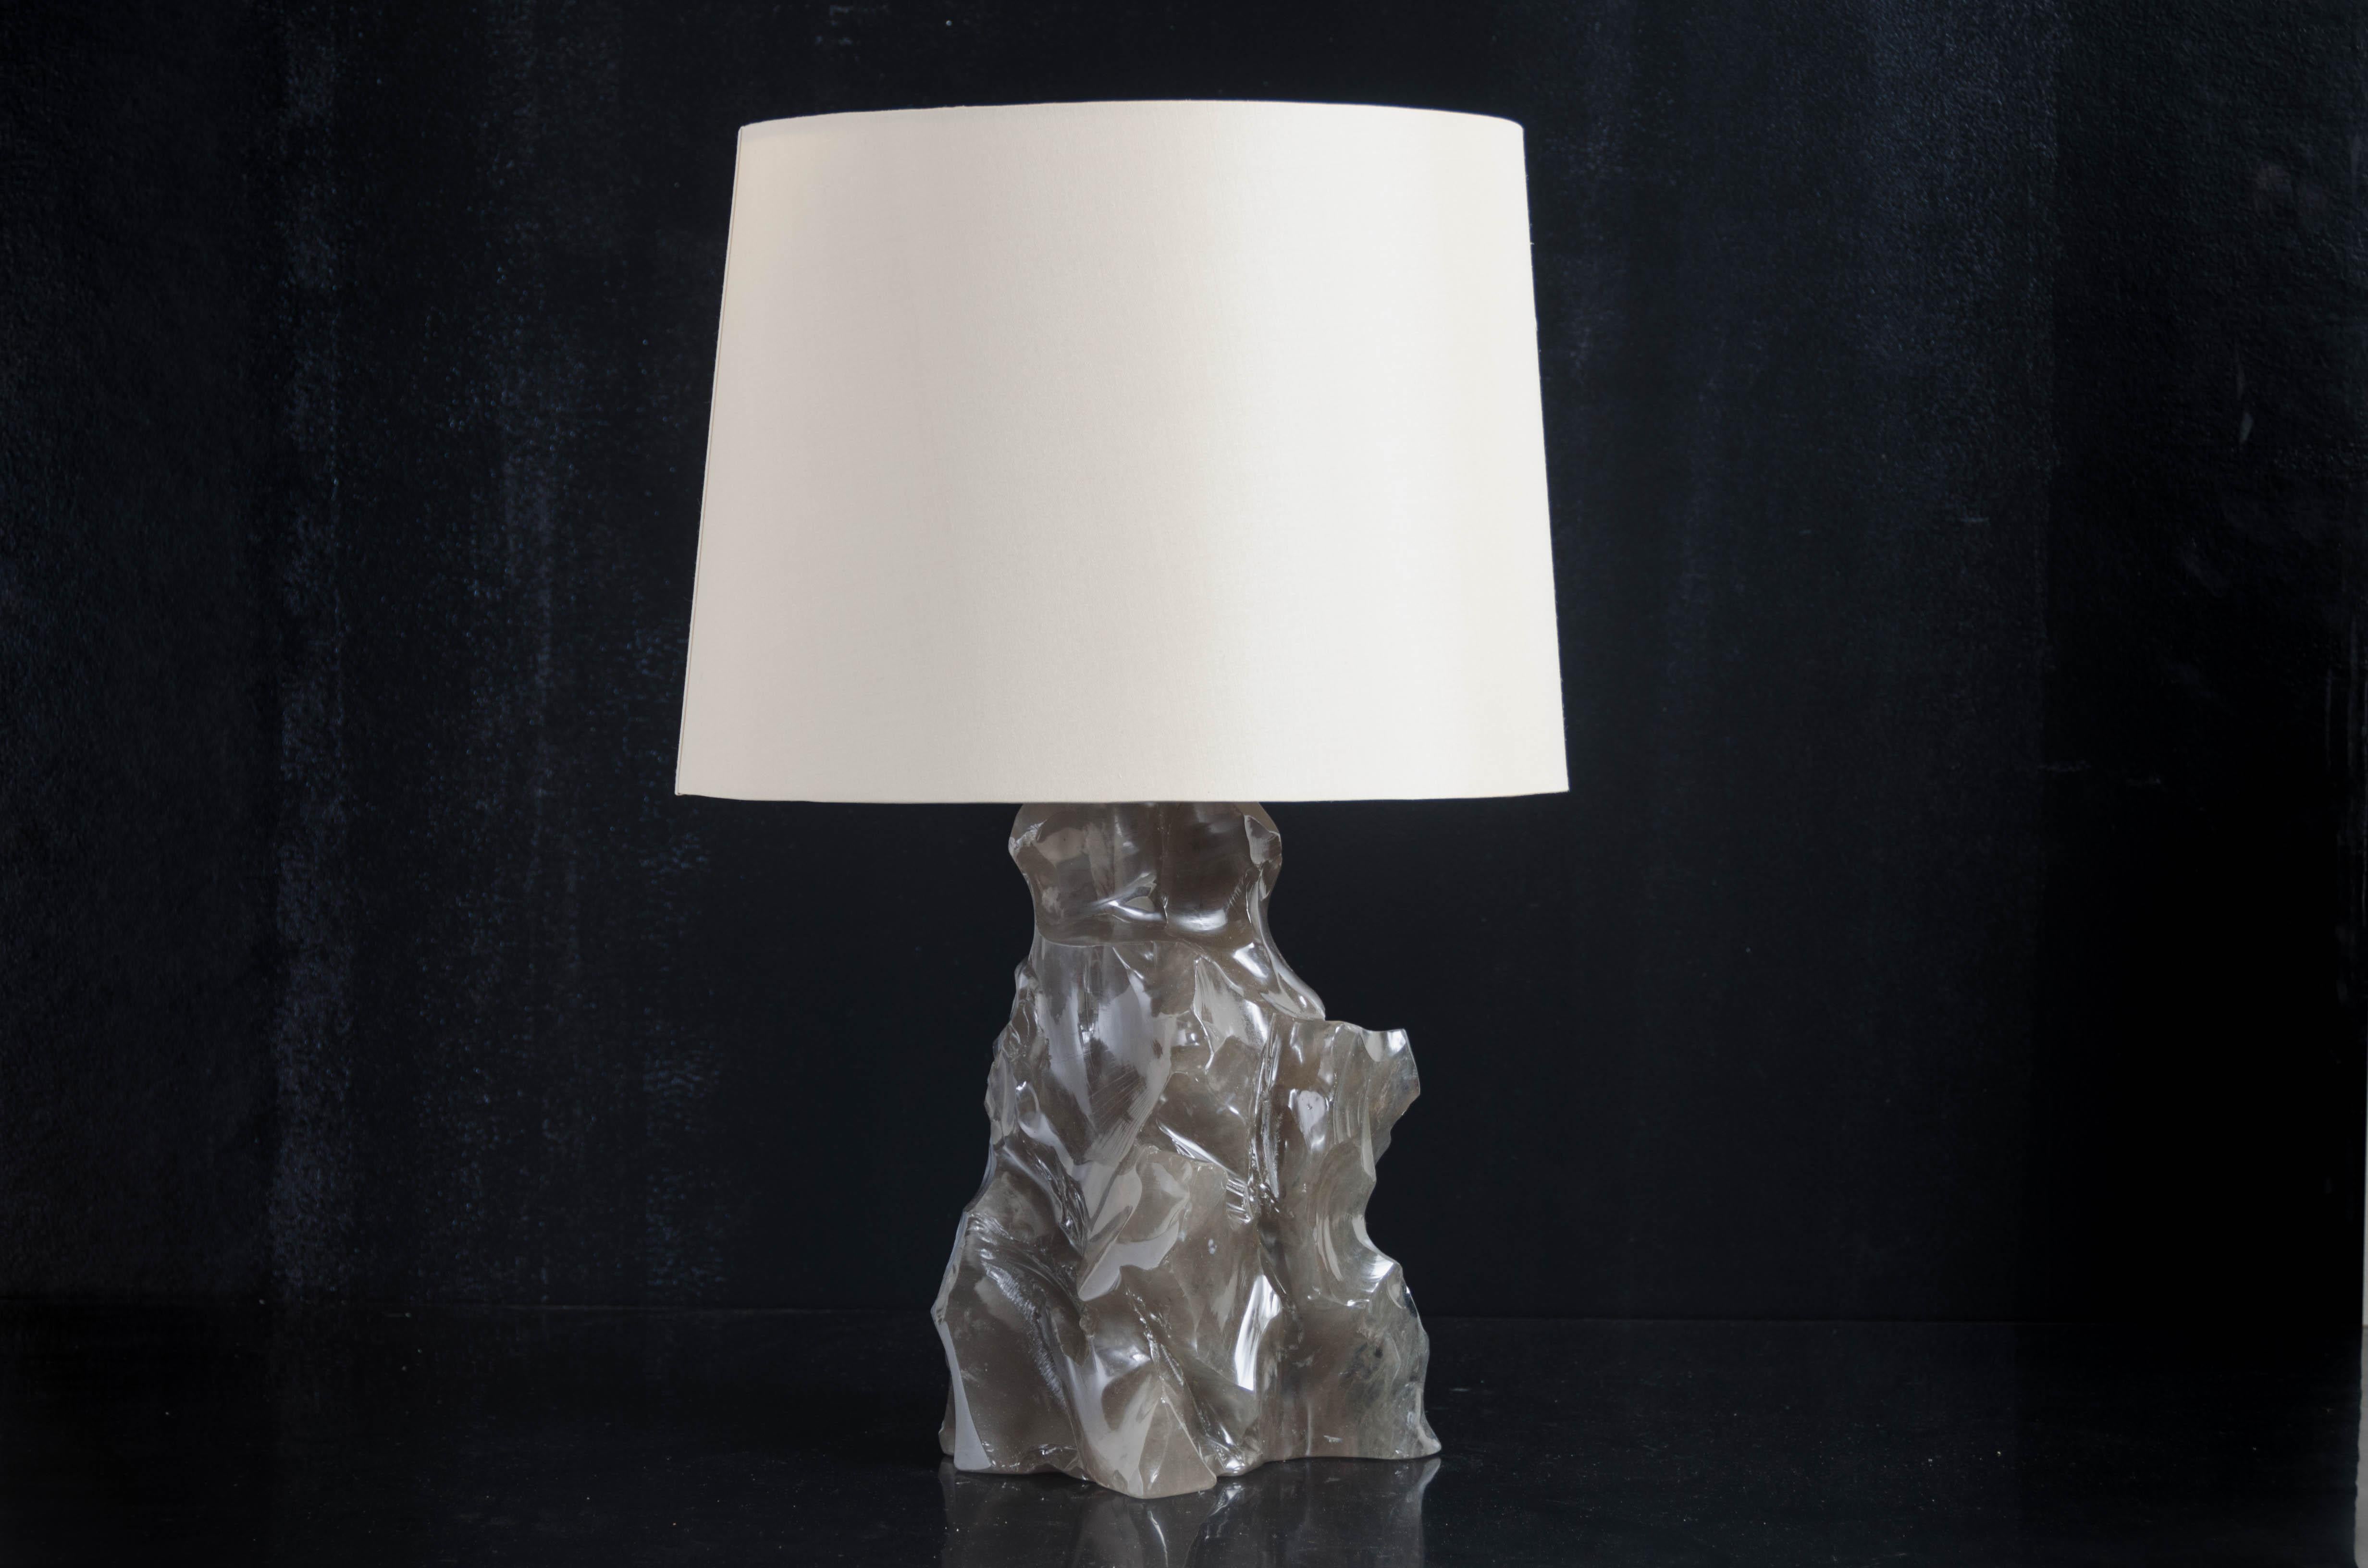 Scholar rock lamp
Smoke crystal
Hand carved
Silk shade
Lamp shade dimensions: 14